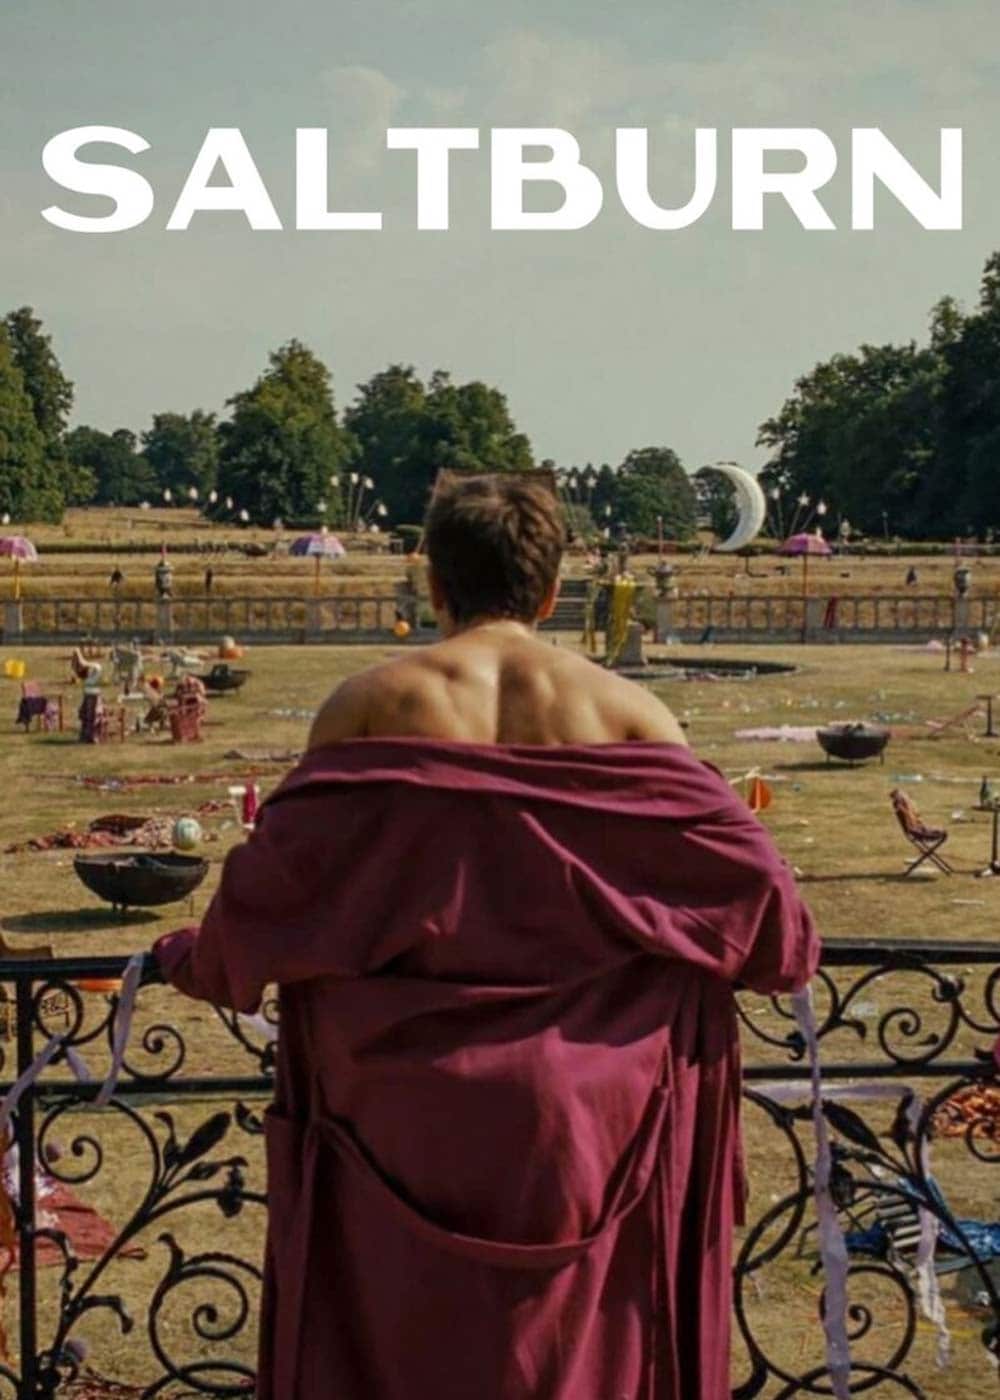 Saltburn Movie (English) Cast, Music, Release Date, Trailer